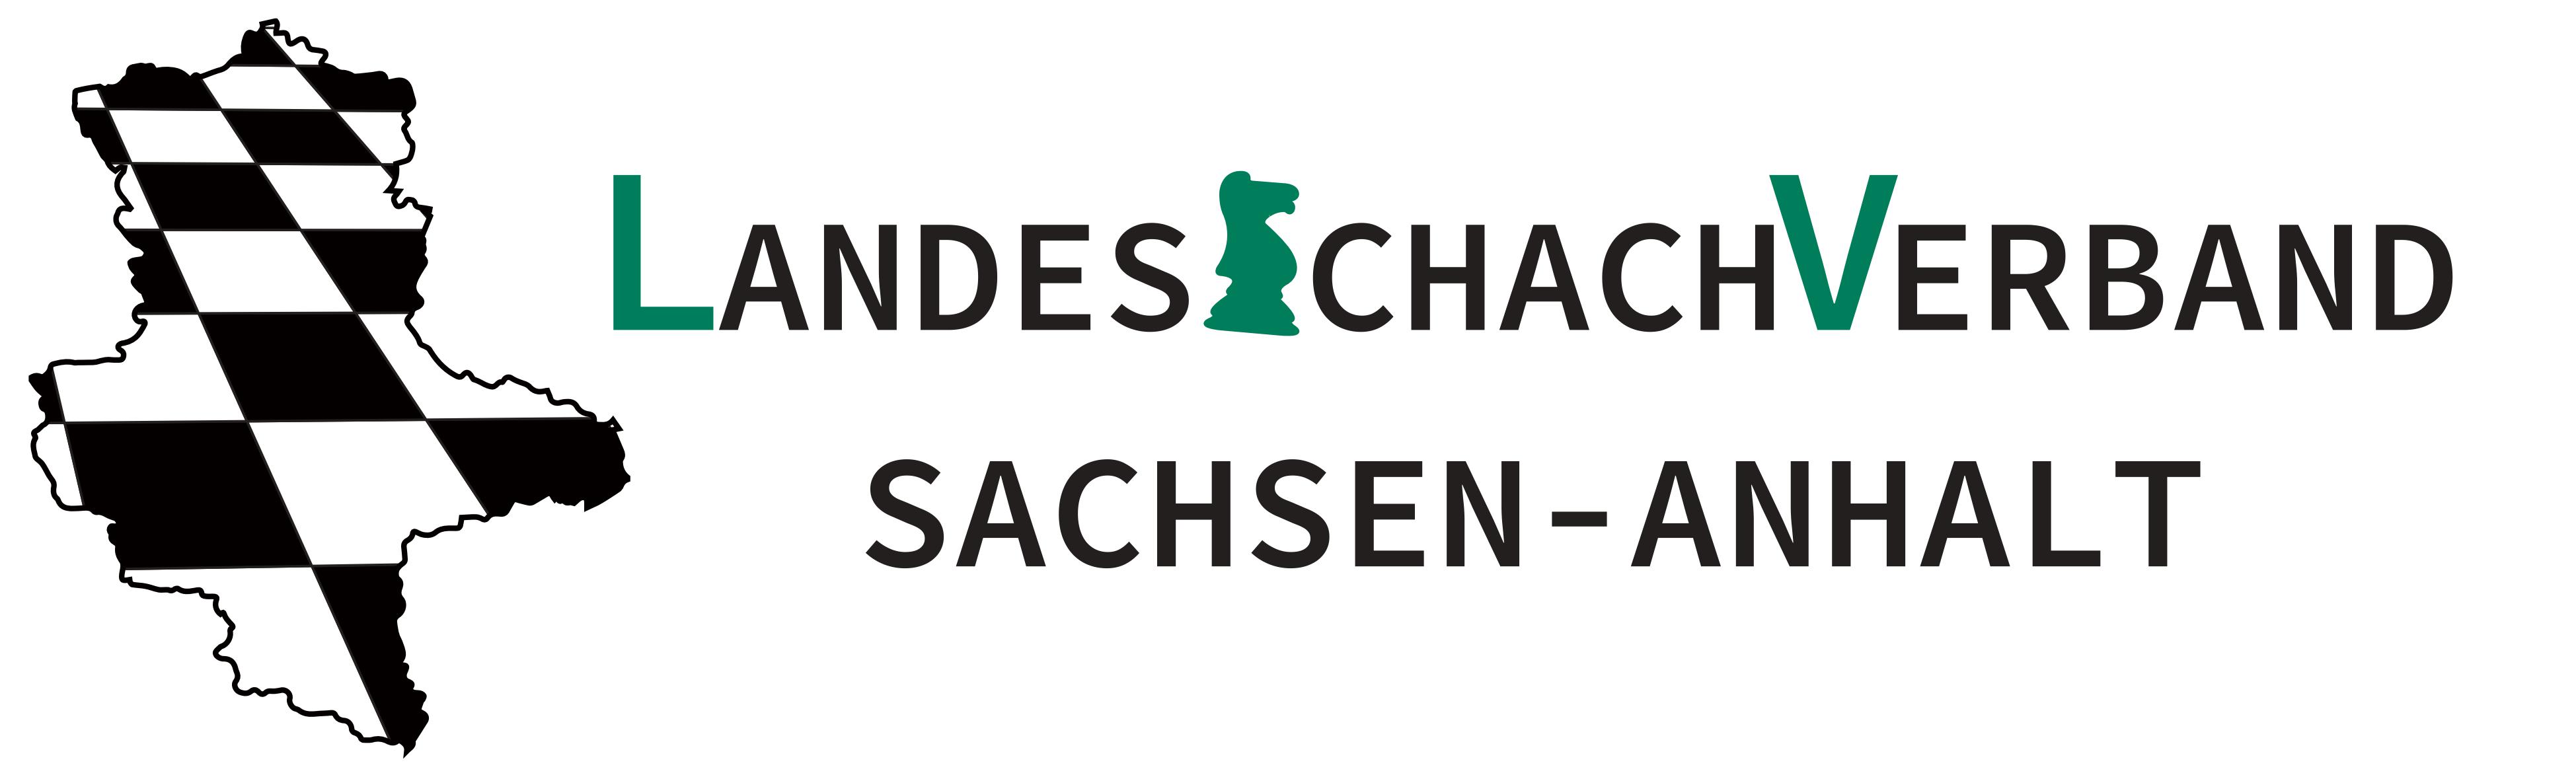 Landesschachverband Sachsen-Anhalt e.V.